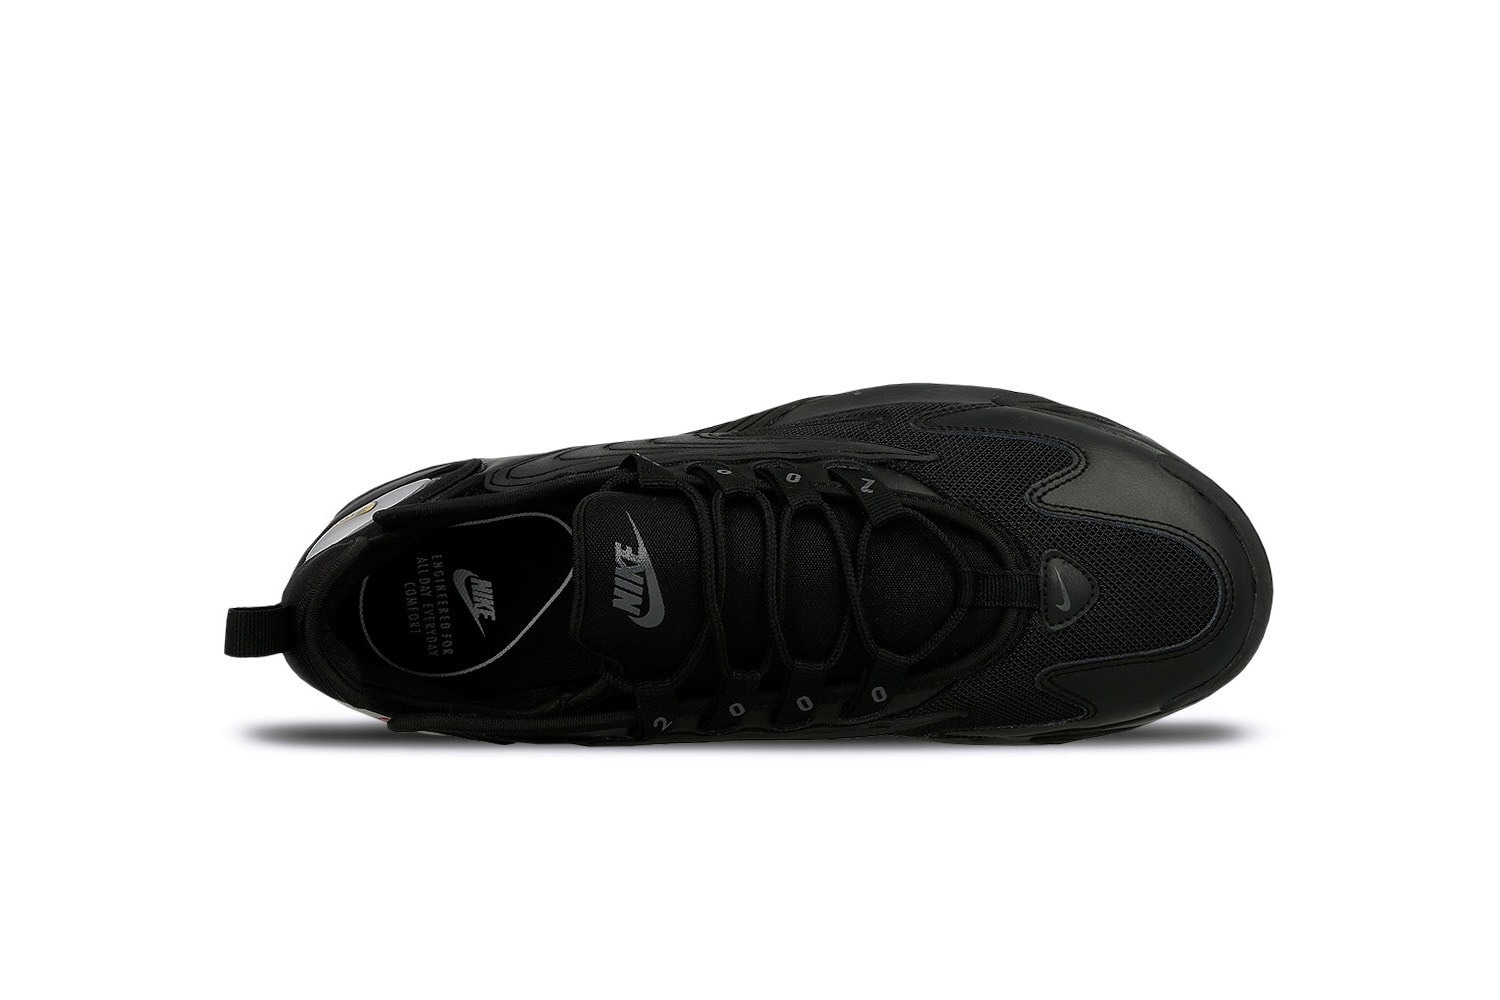 Nike Zoom 2K in "All Black" Release Date Where to Buy Sneaker Shoe Retro Futuristic Modern Silhouette